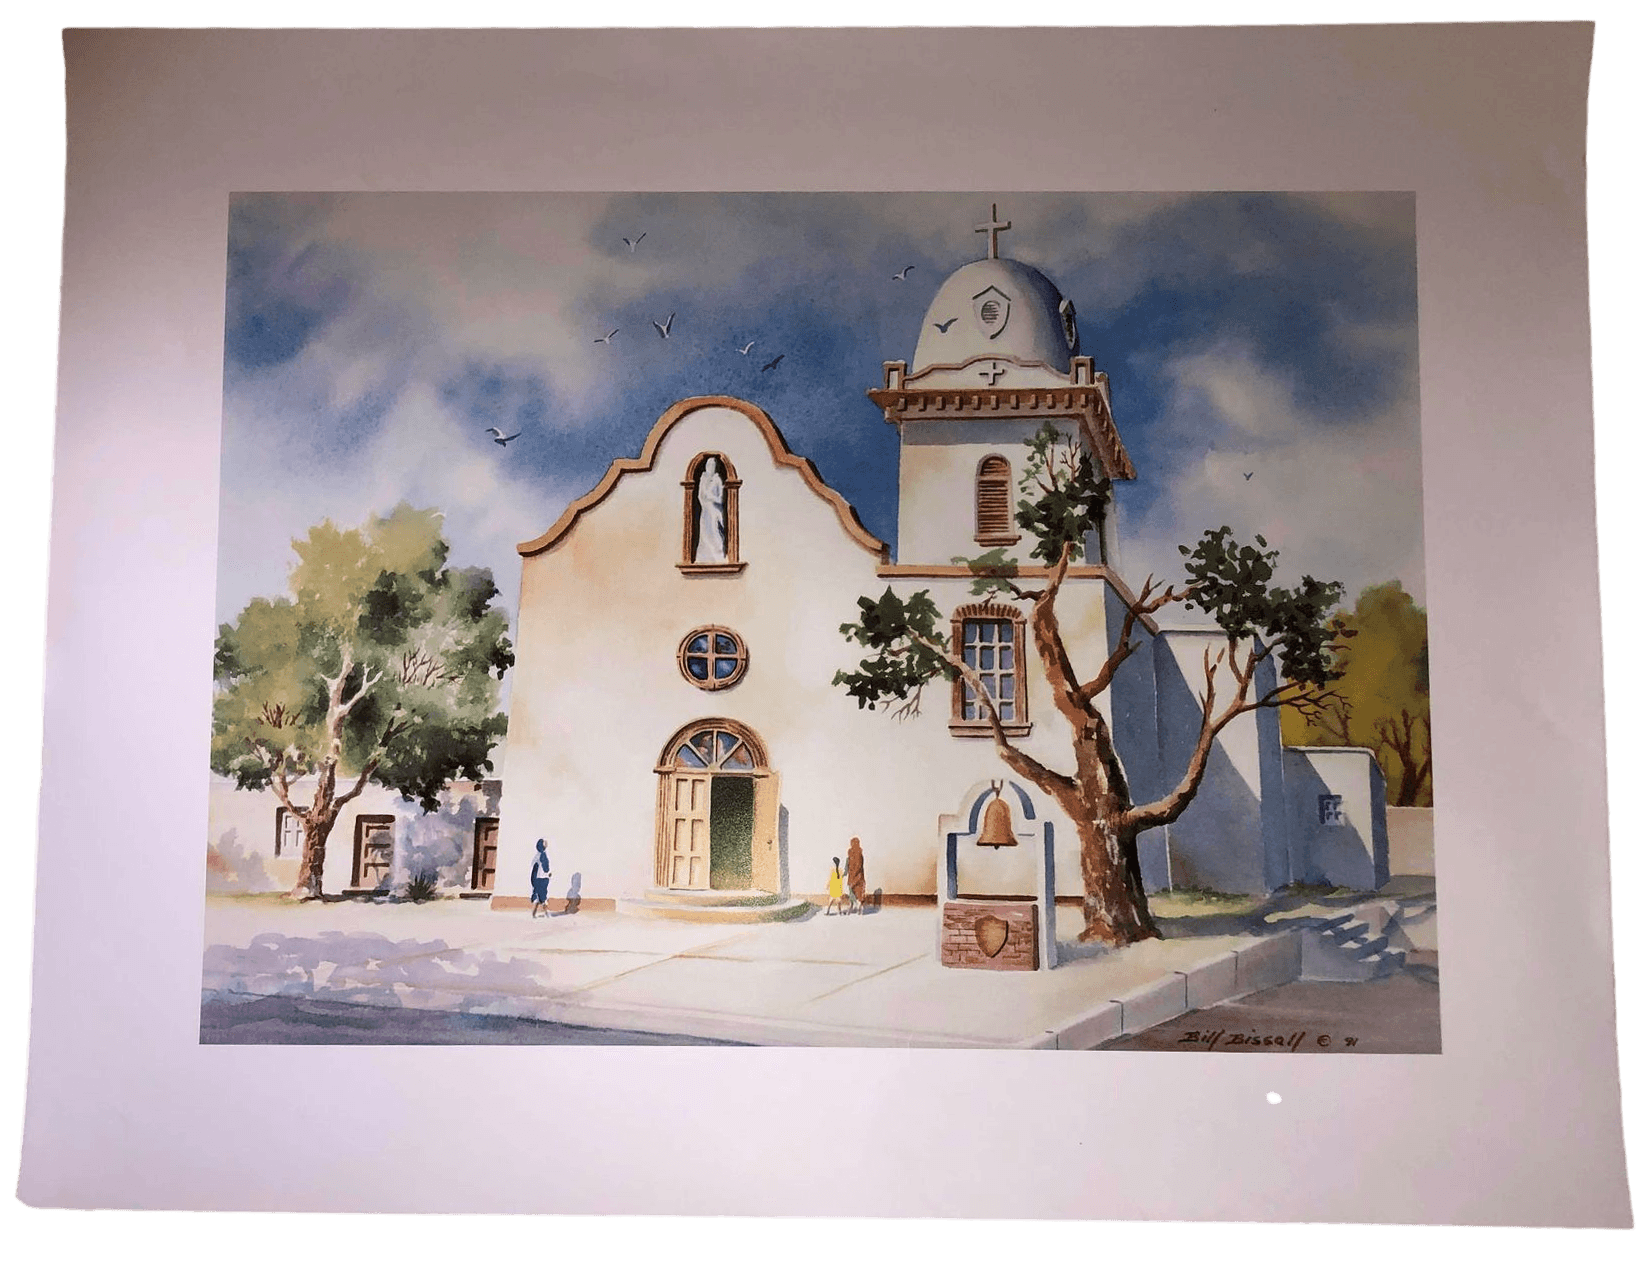 Souvenir Artist Print 1st Run Ysleta Mission in Watercolor El Paso Hall of Fame Artist Bill Bissal 1991 21"L X 27.5" W - Ysleta Mission Gift Shop- VOTED El Paso's Best Gift Shop